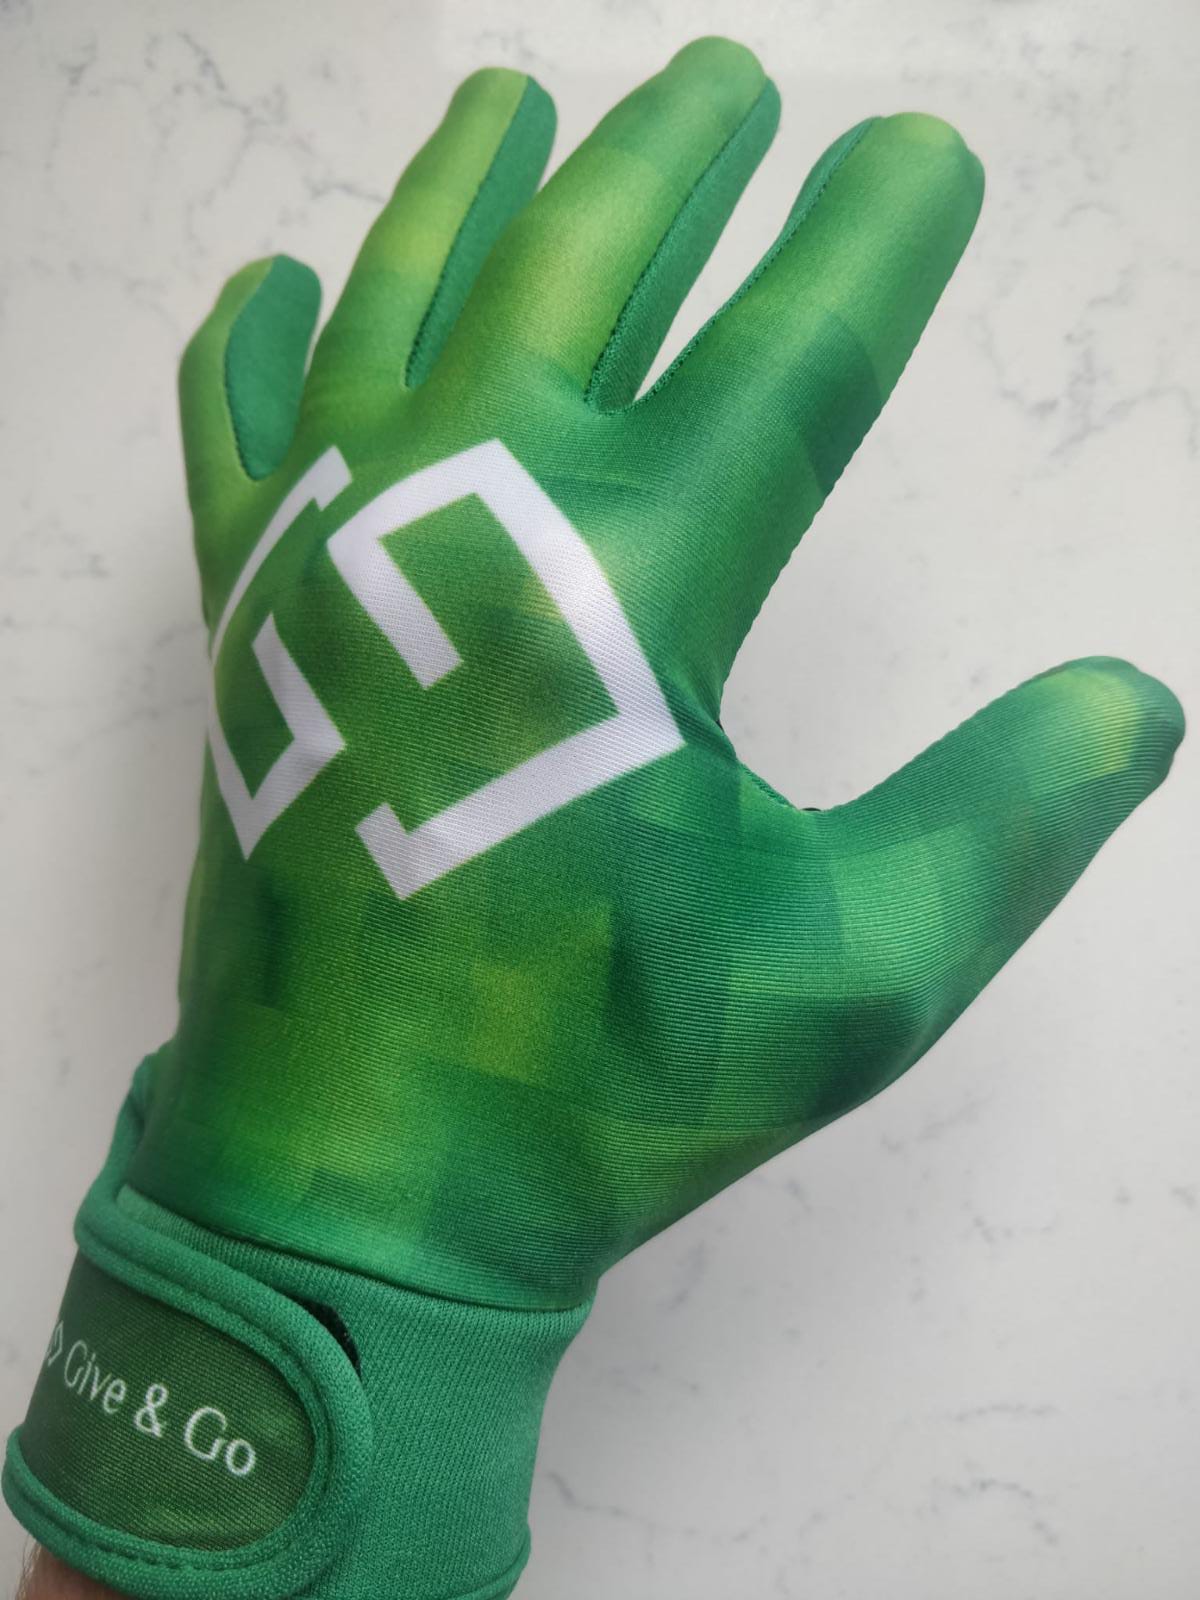 Give & Go Gloves (Green / White)